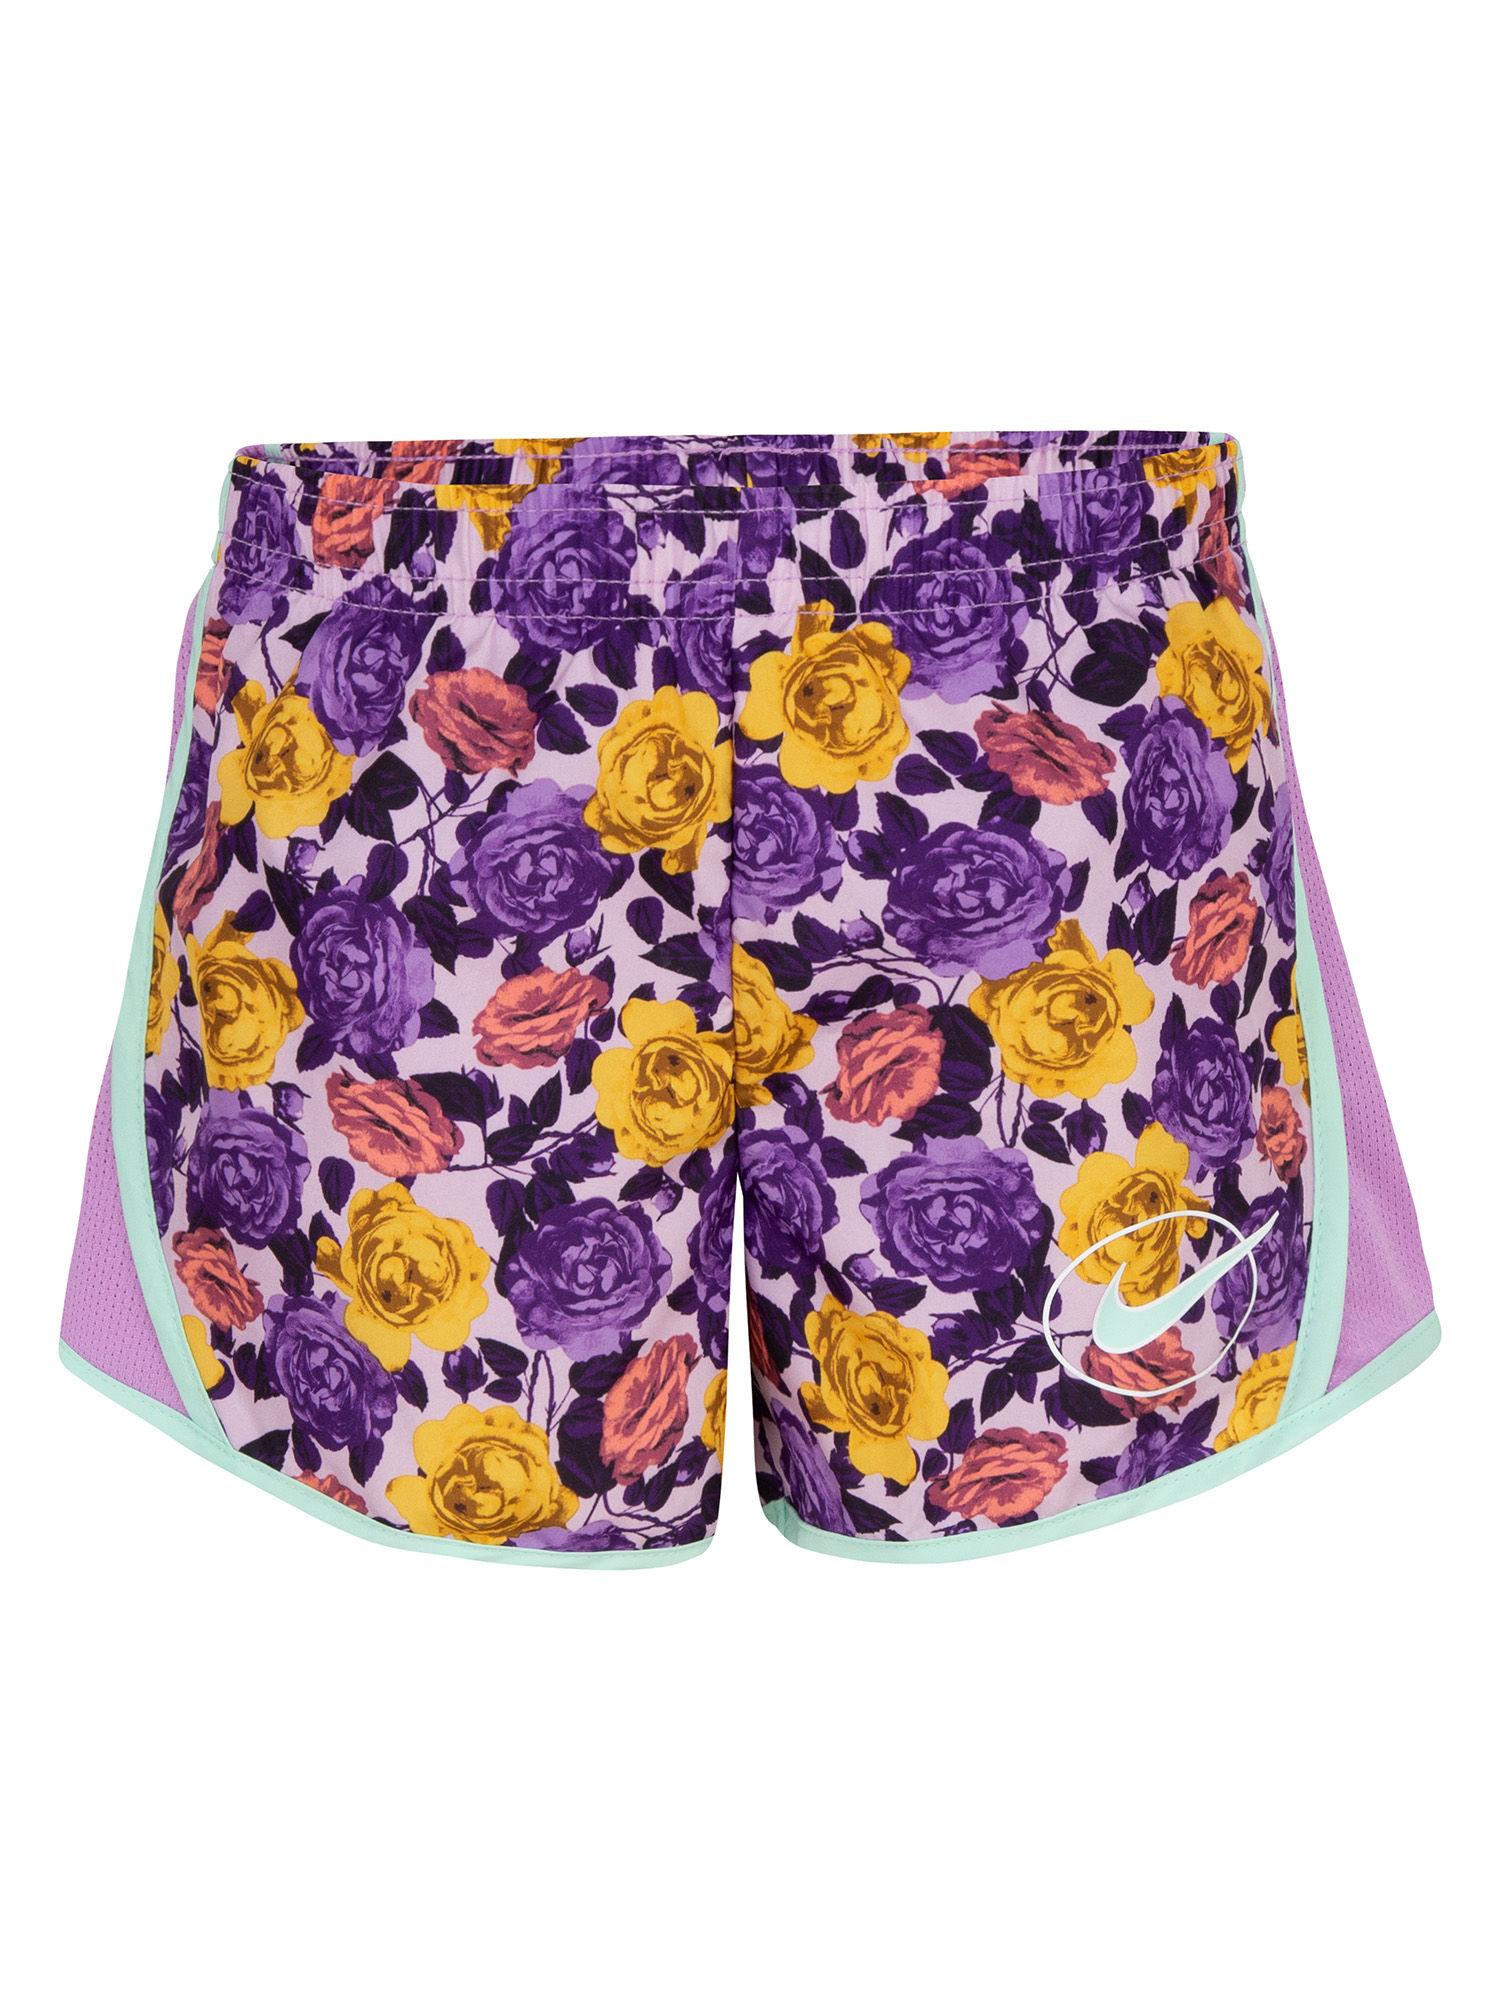 Girls Purple Floral Shorts